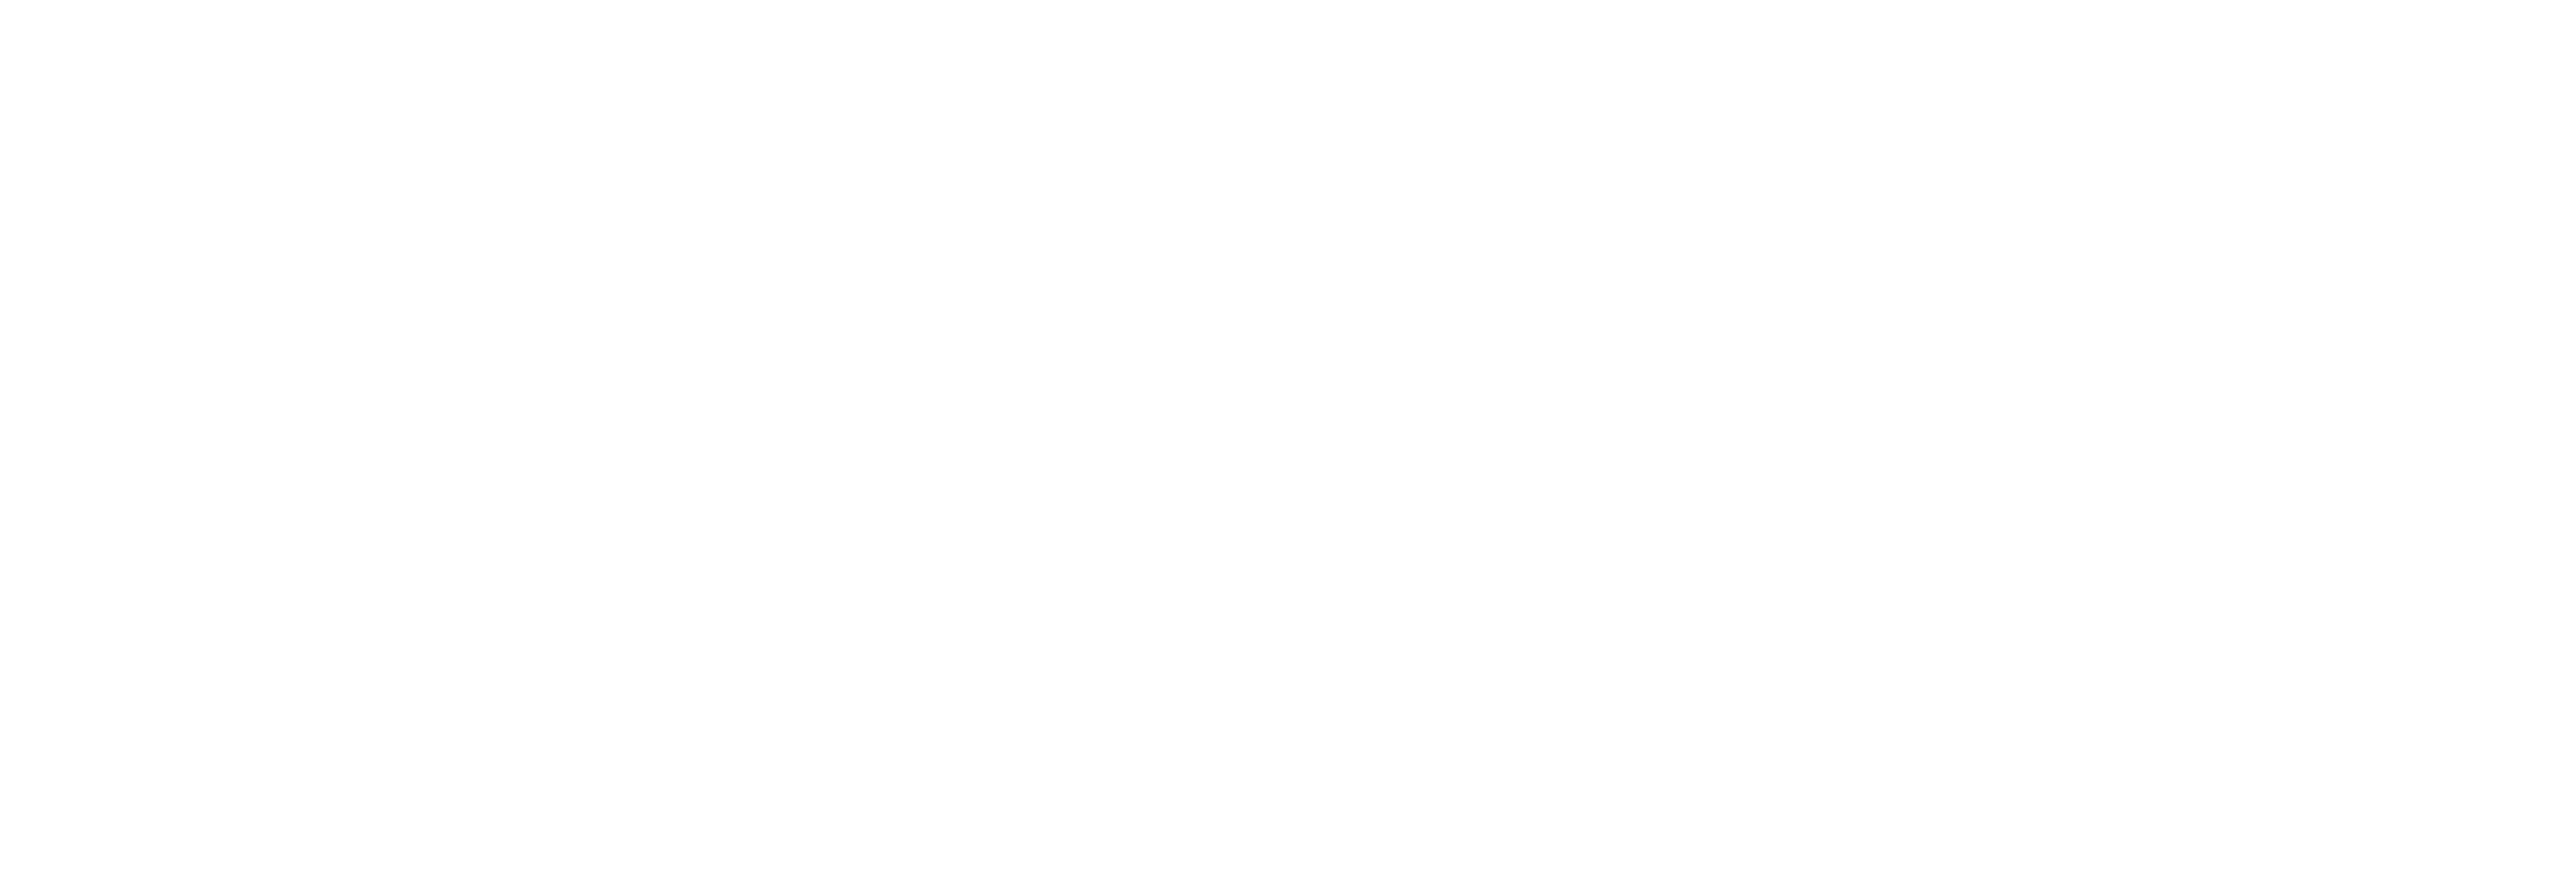 AniCura Maastricht logo